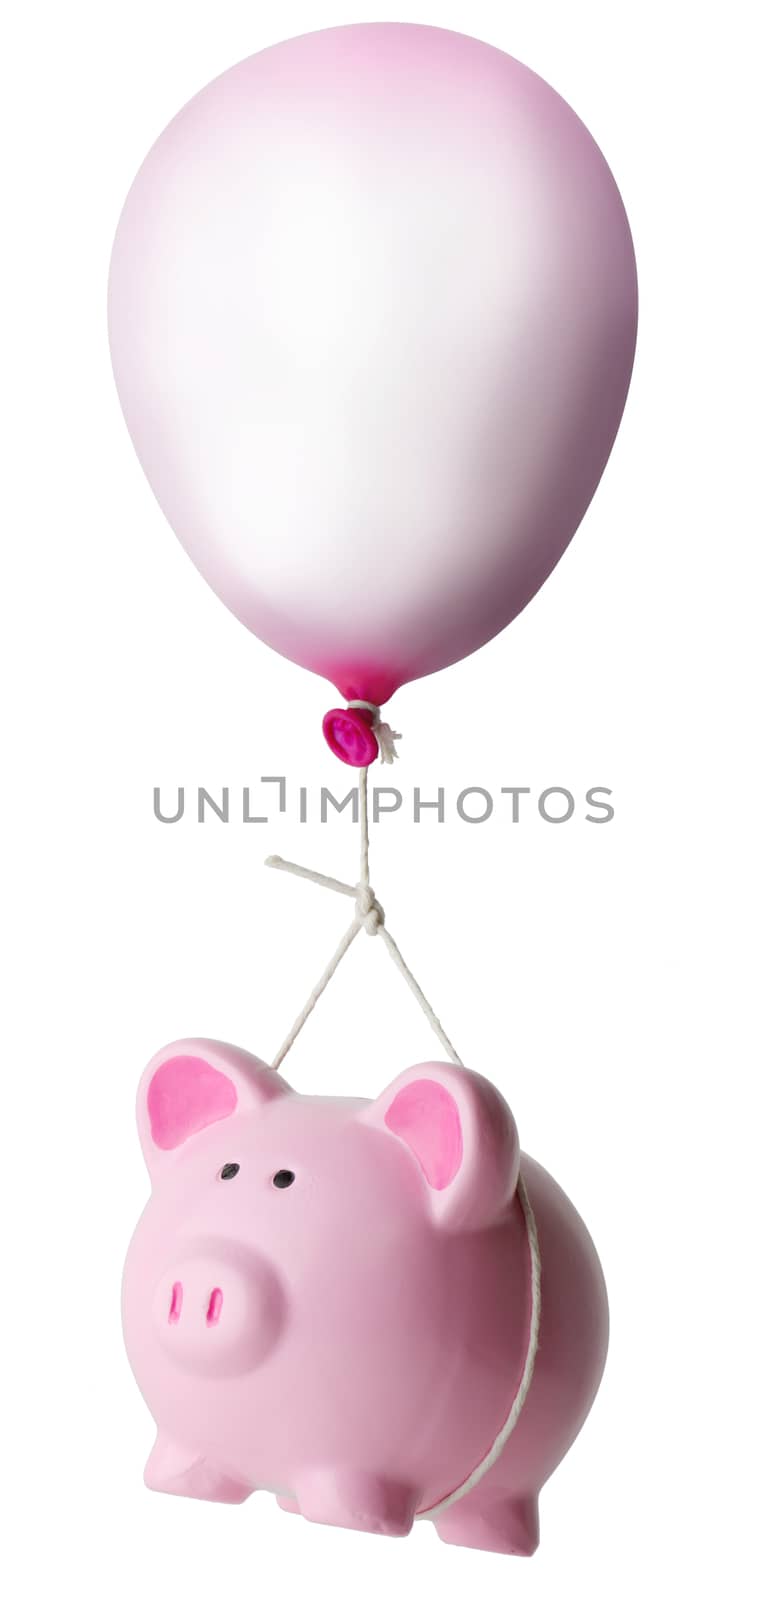 Piggy bank balloon by hyrons